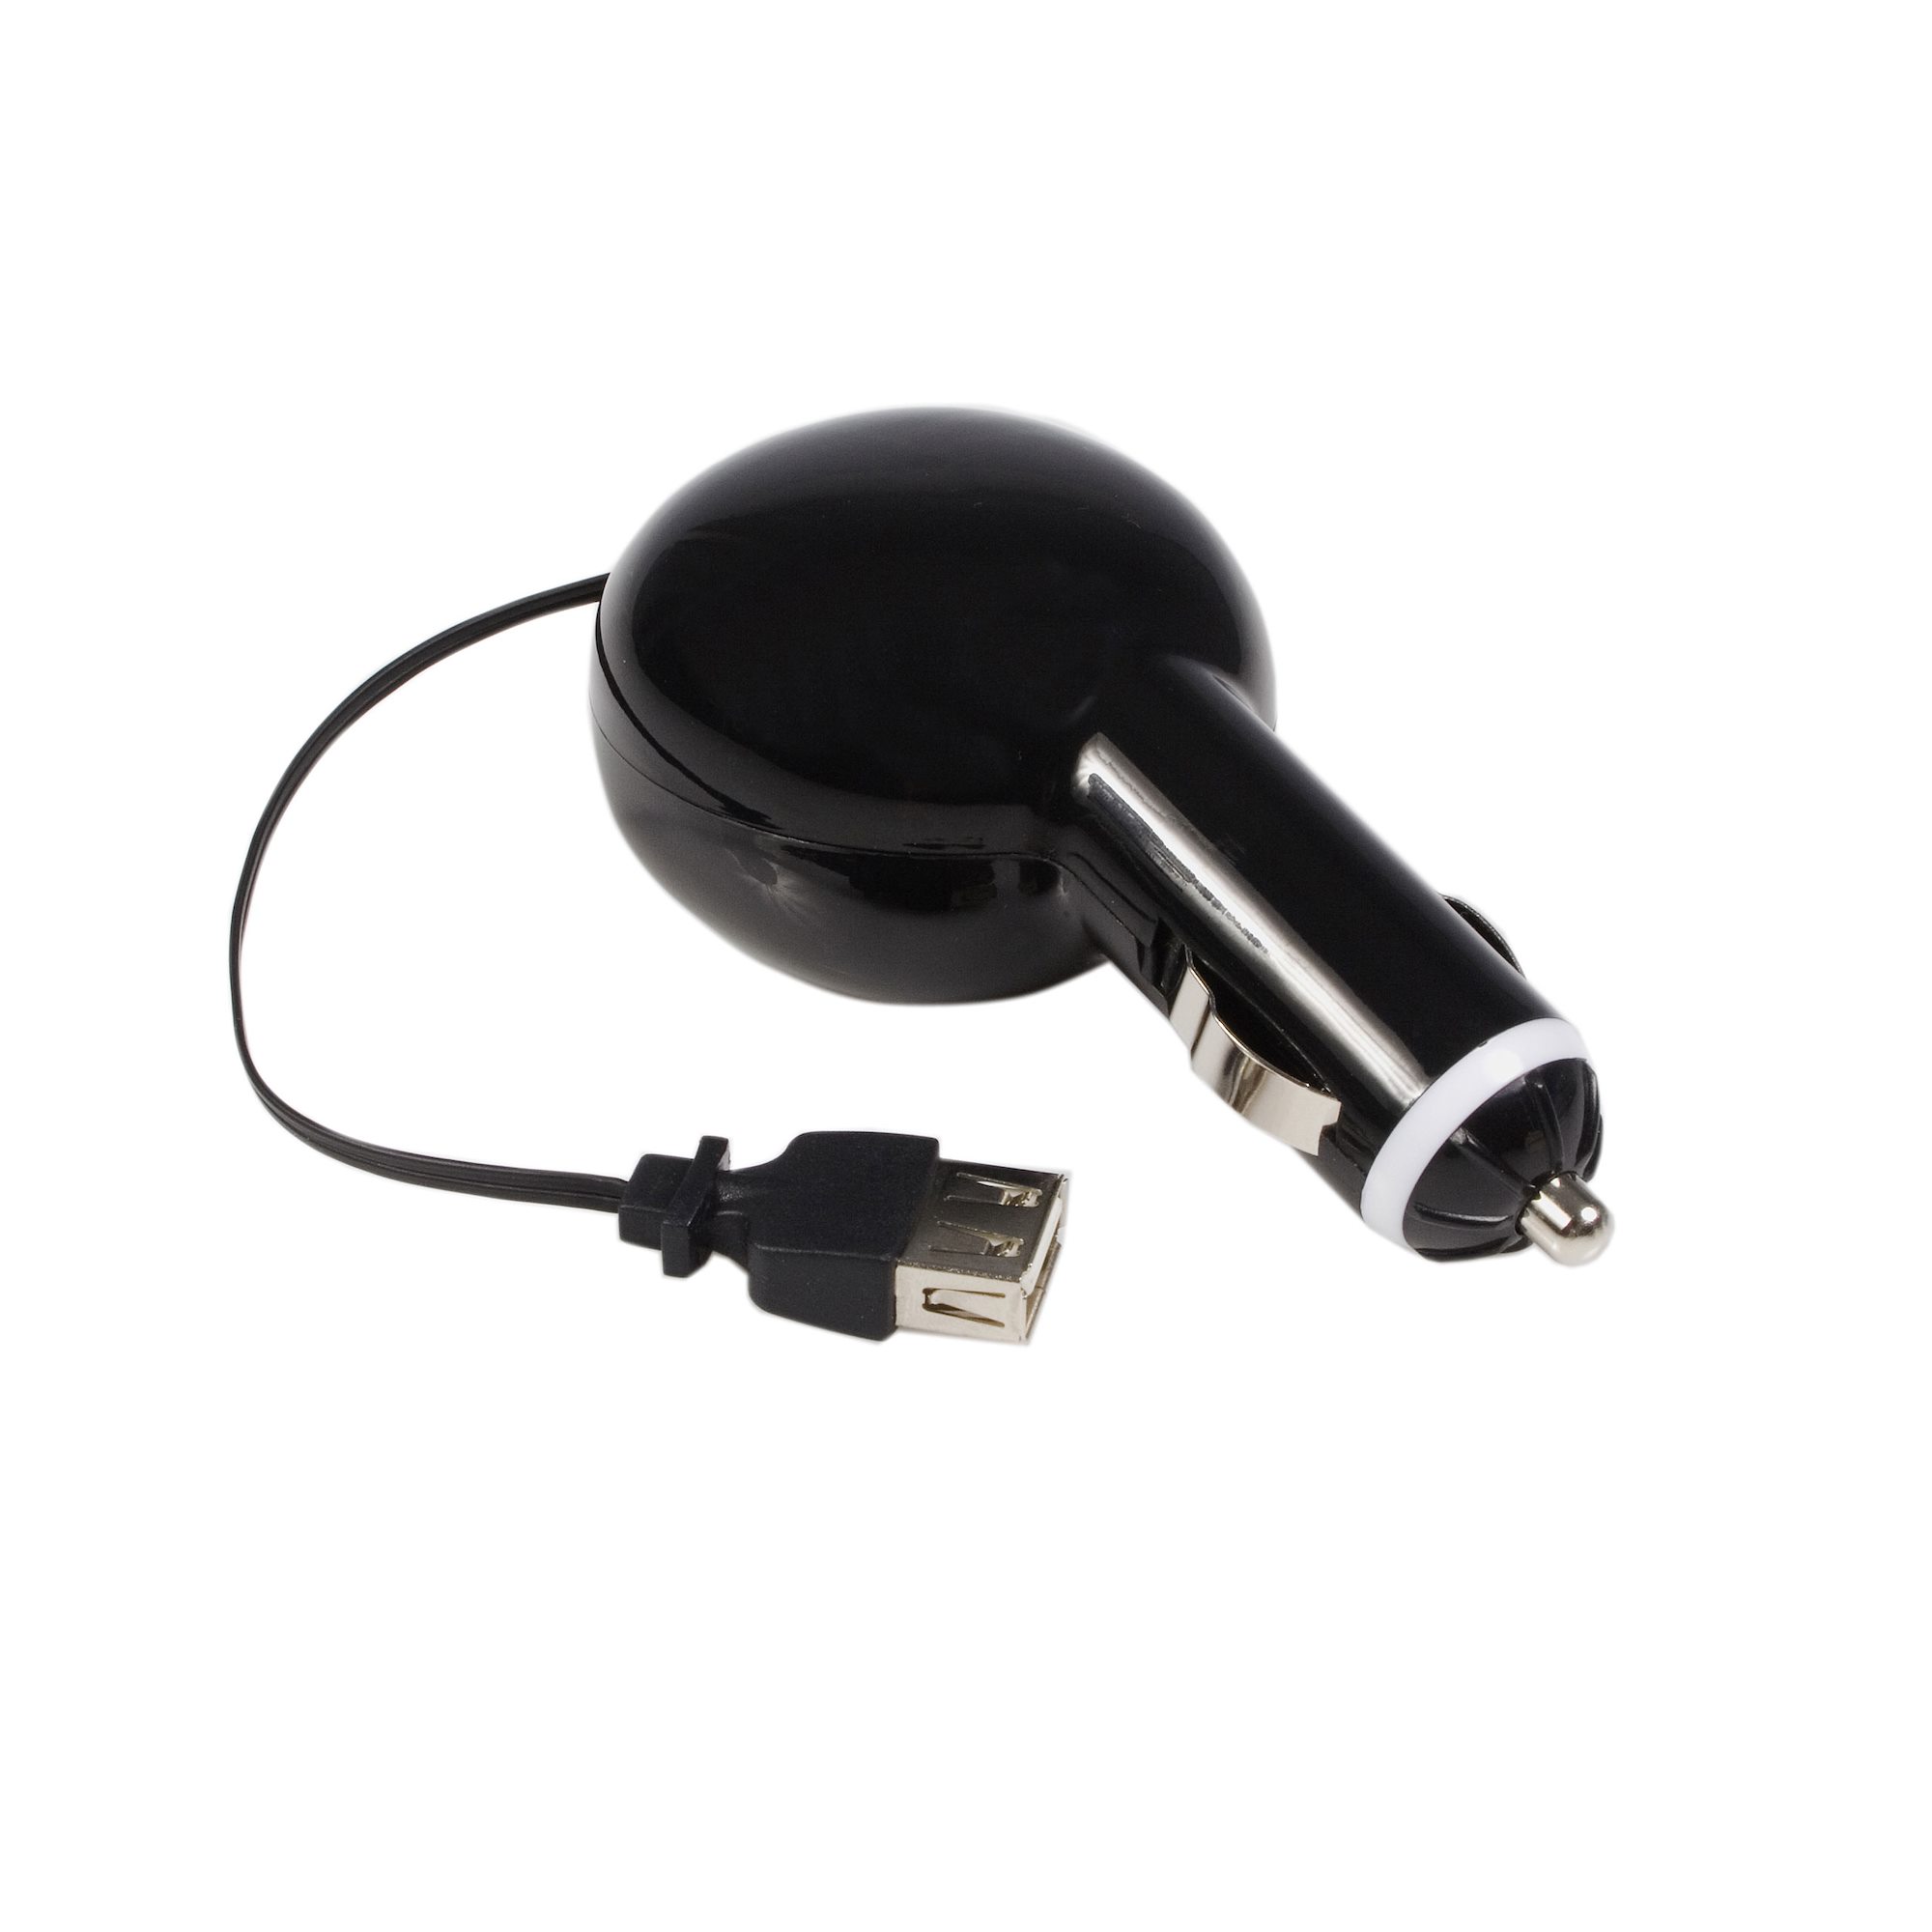 USB Retractable Car Charger Adapter - USB Adapters (USB 2.0